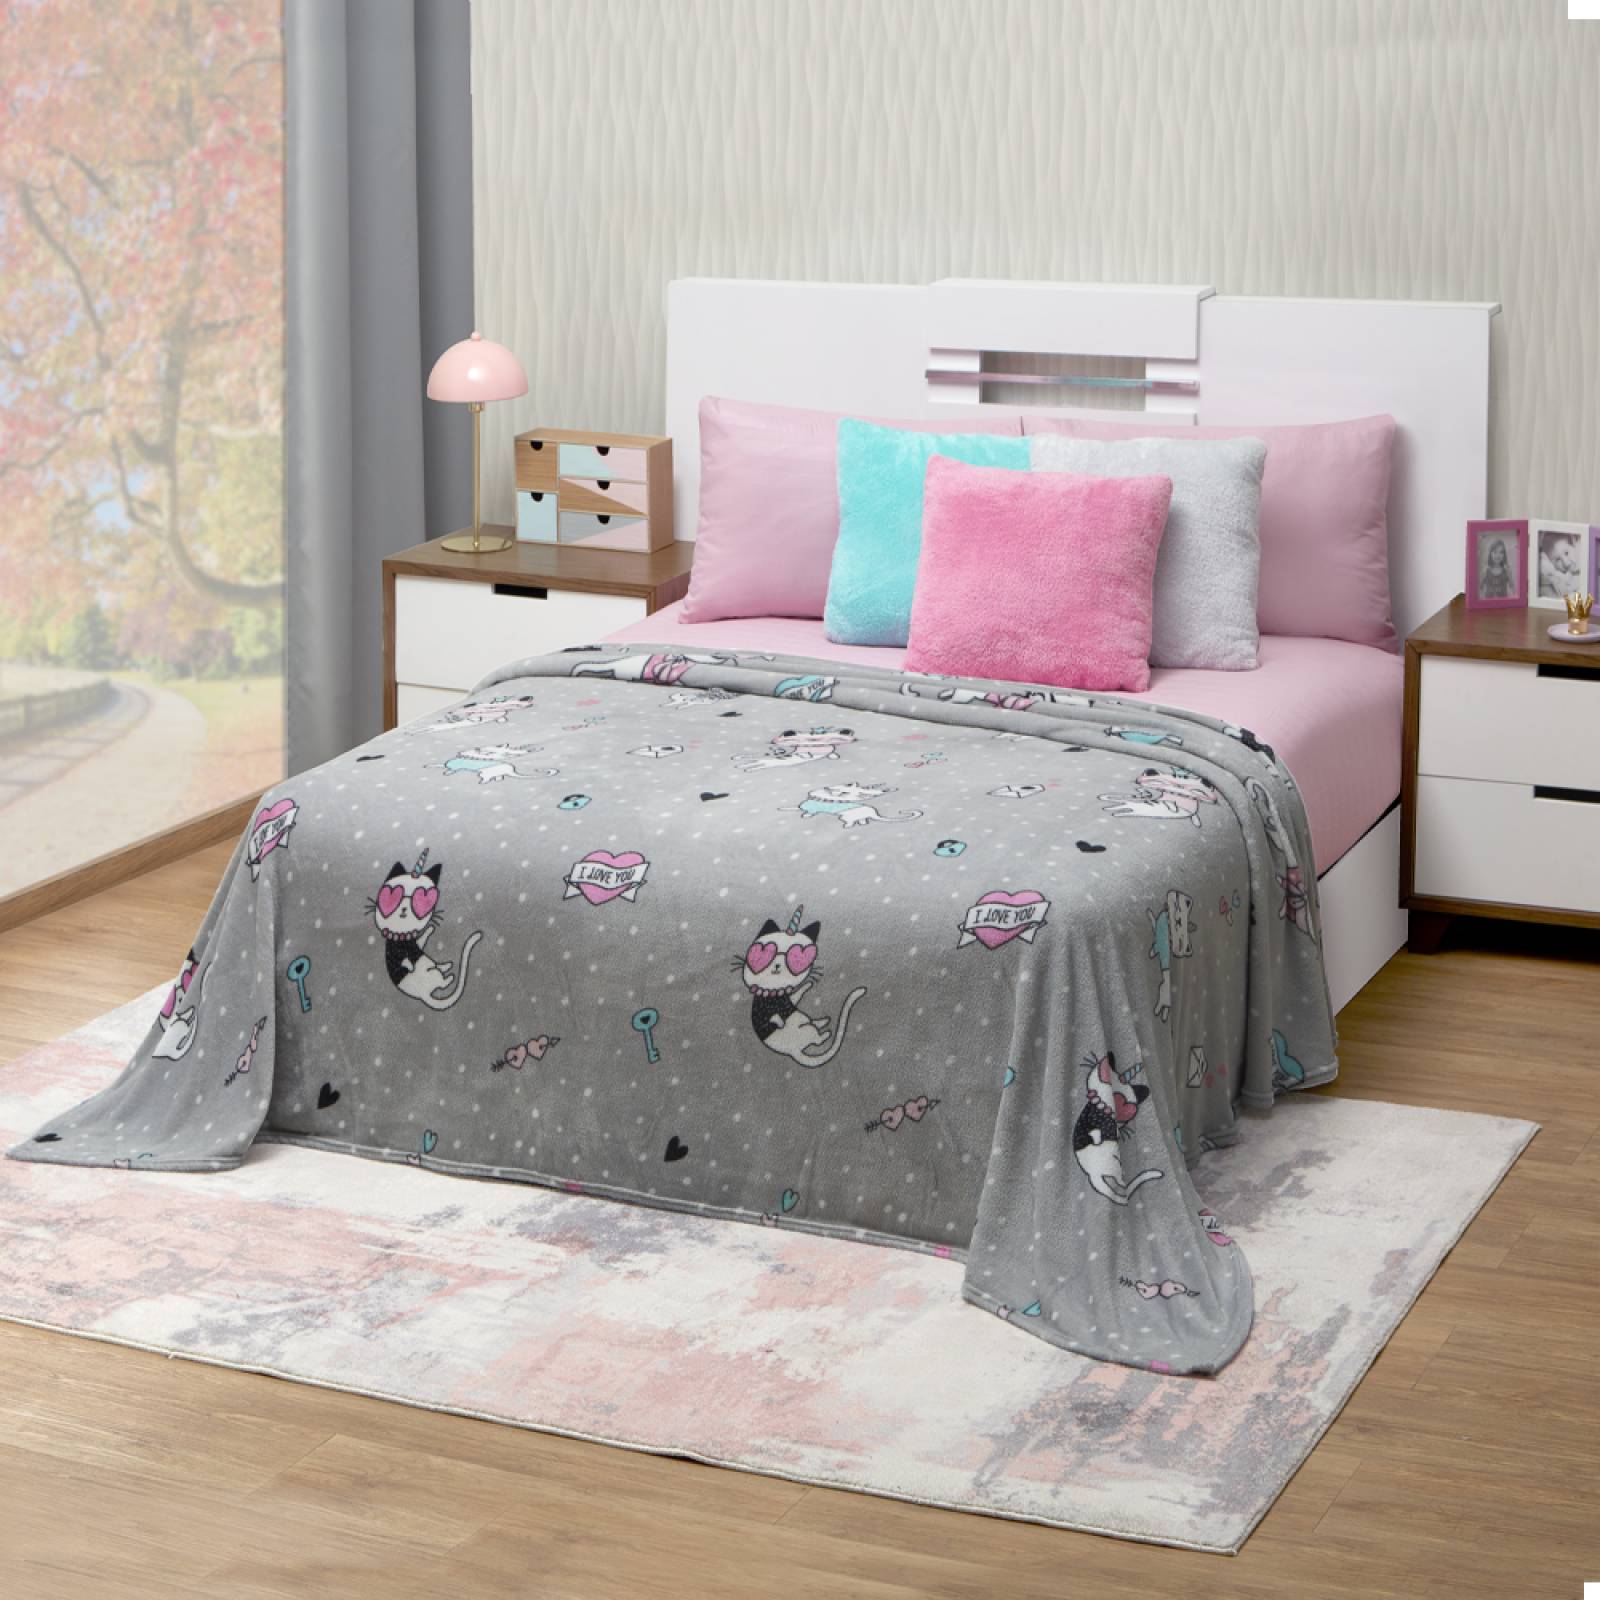 Cobertor lujoso reversible para cama queen – Mercadito Smart